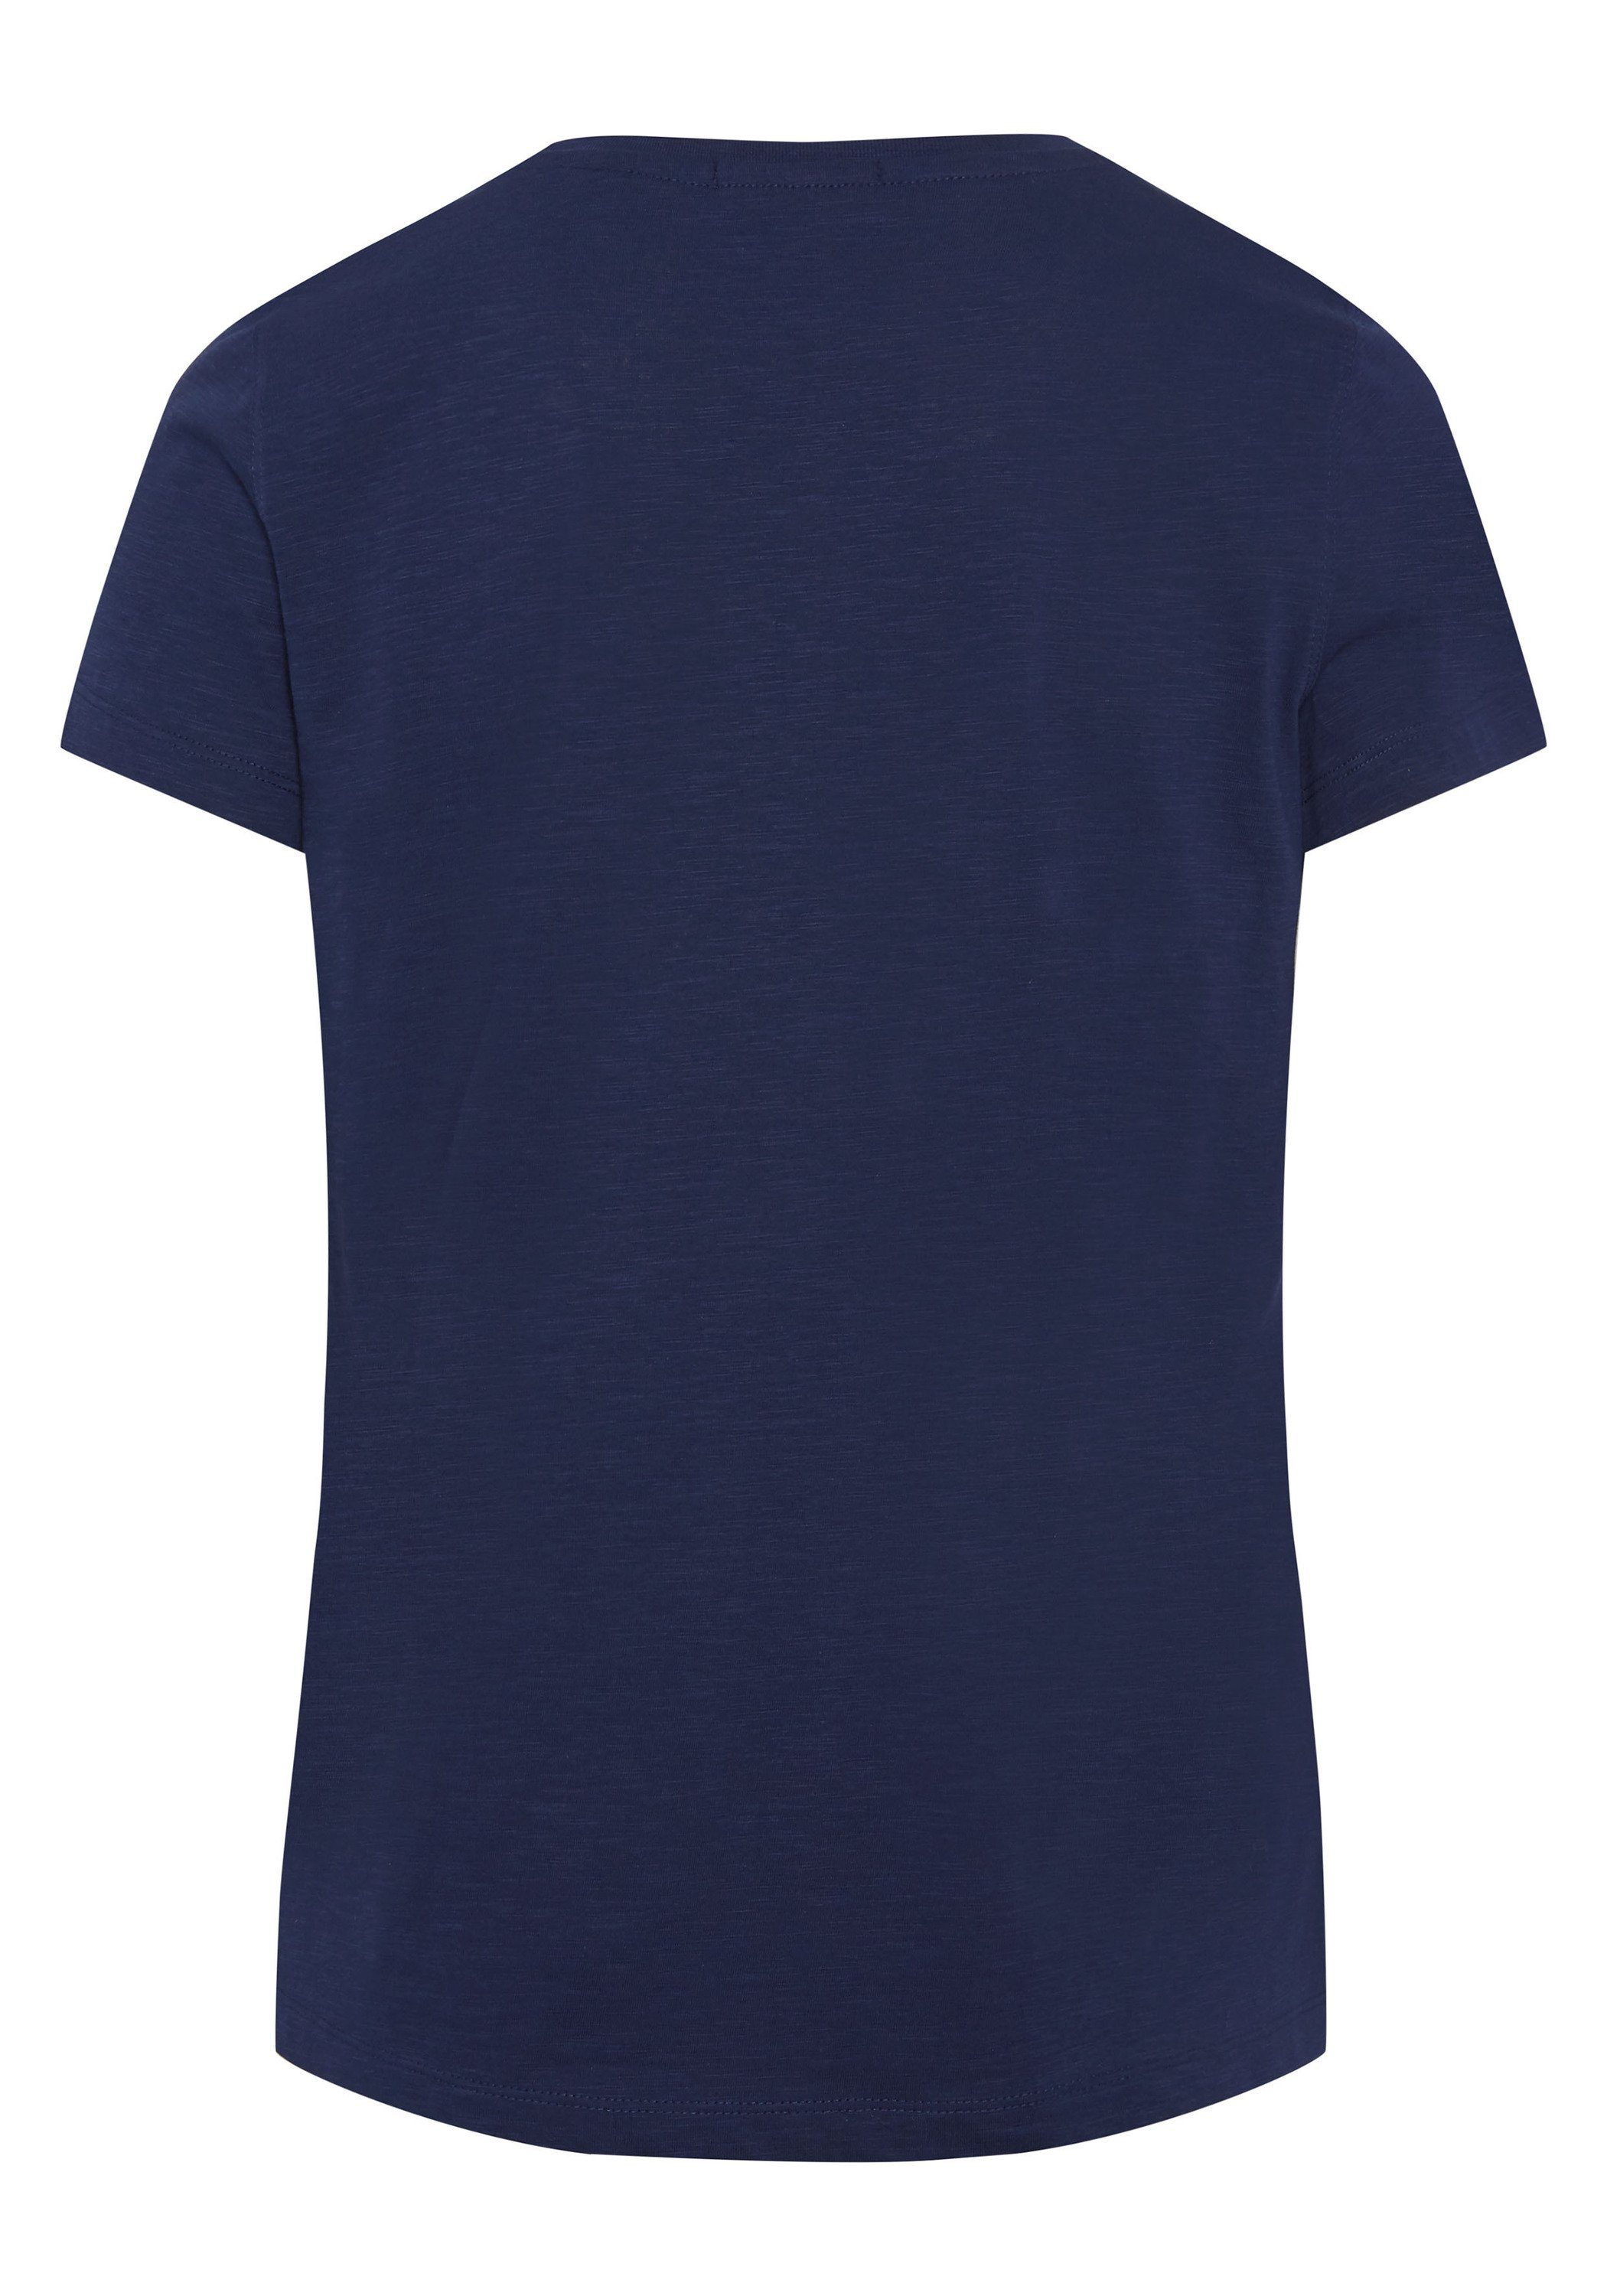 T-Shirt Blue 1 Jumper-Frontprint 19-3933 Chiemsee Print-Shirt mit Medieval